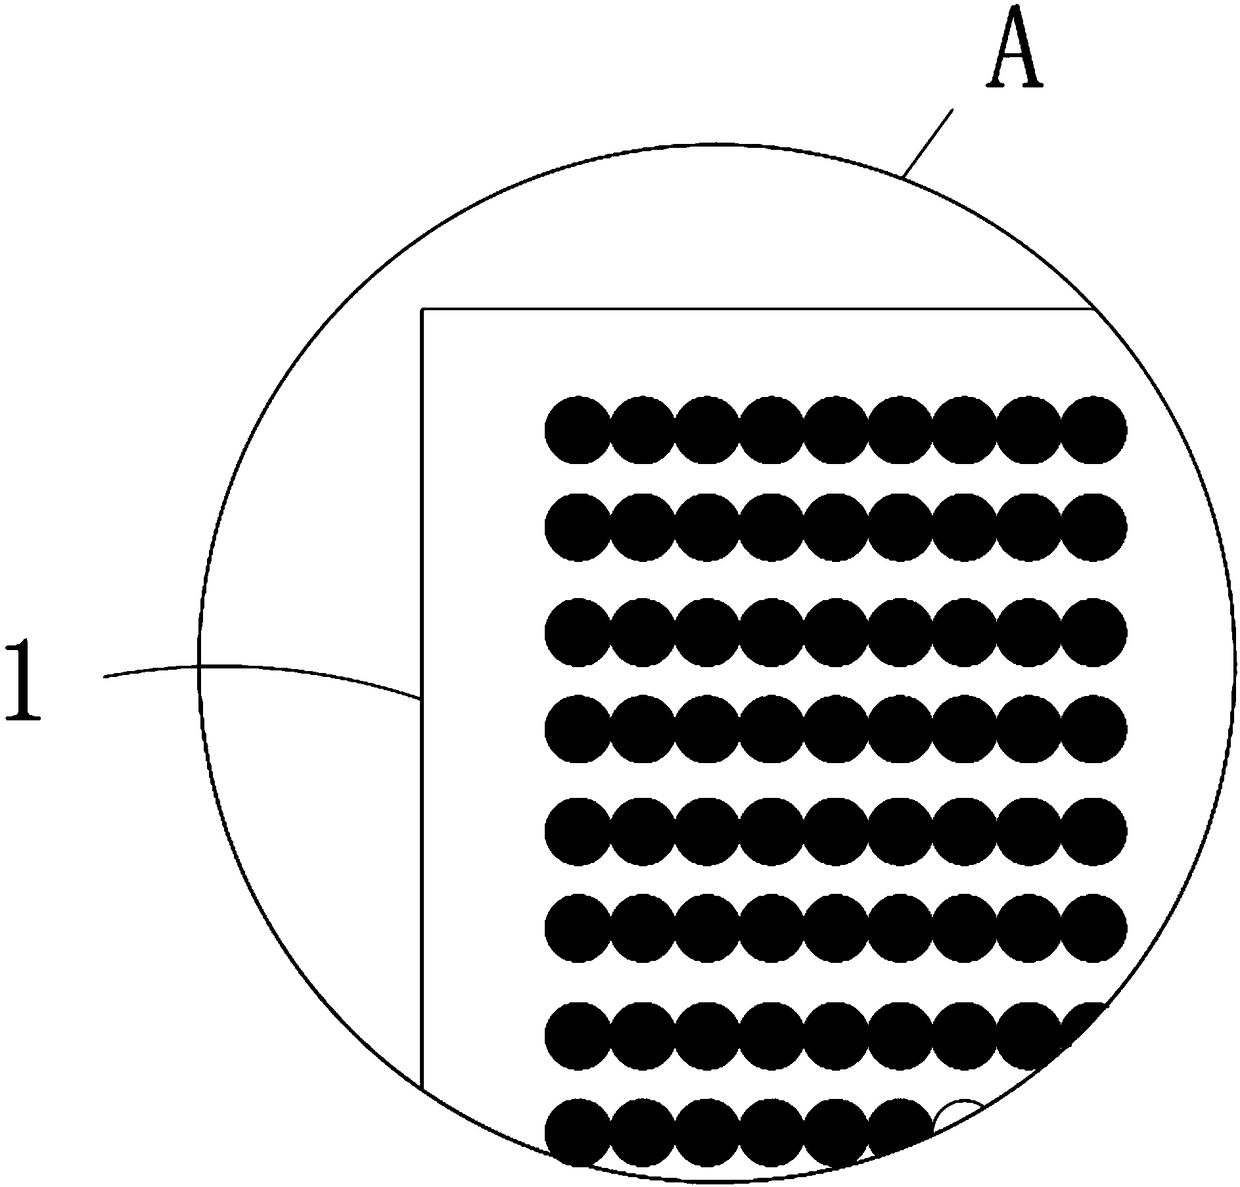 Back passivation matrix dot type laser grooving conductive structure